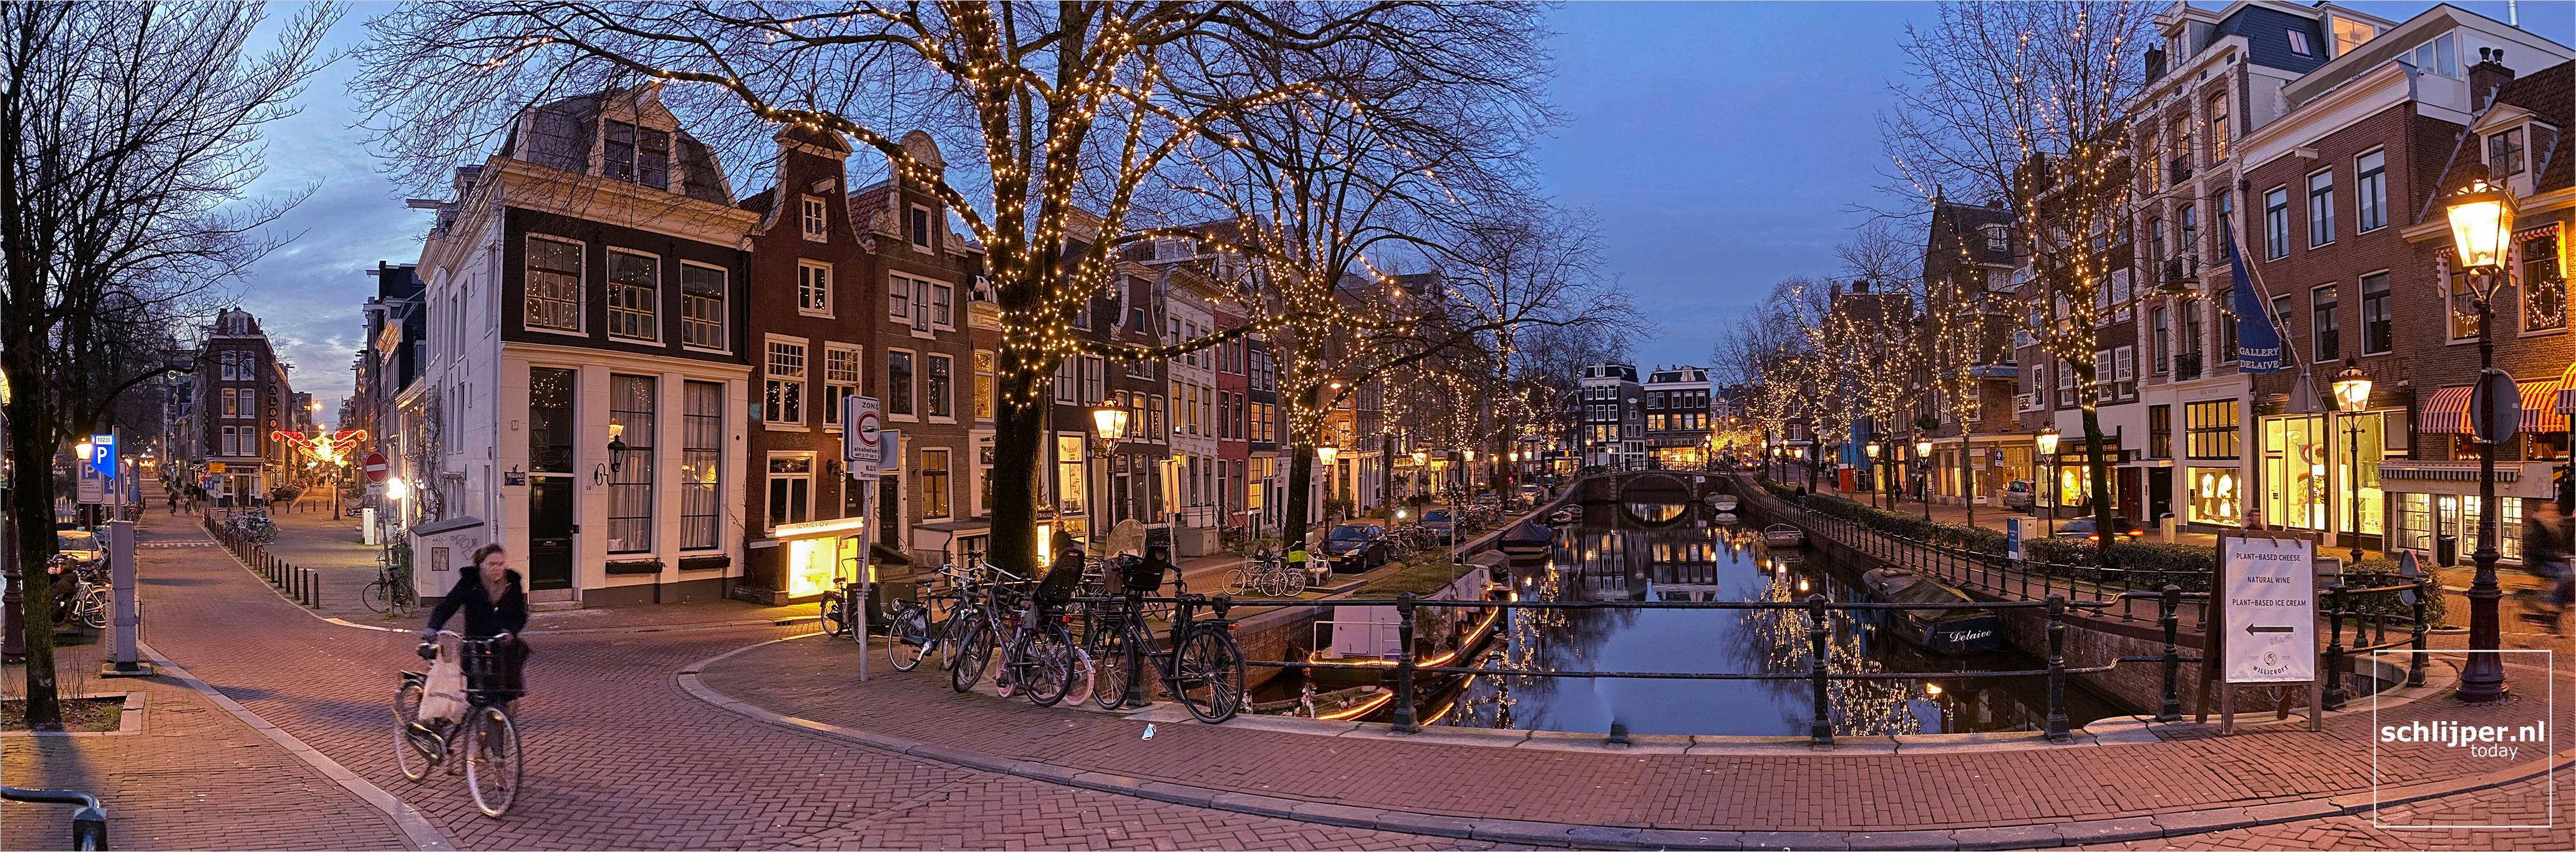 The Netherlands, Amsterdam, 4 februari 2021